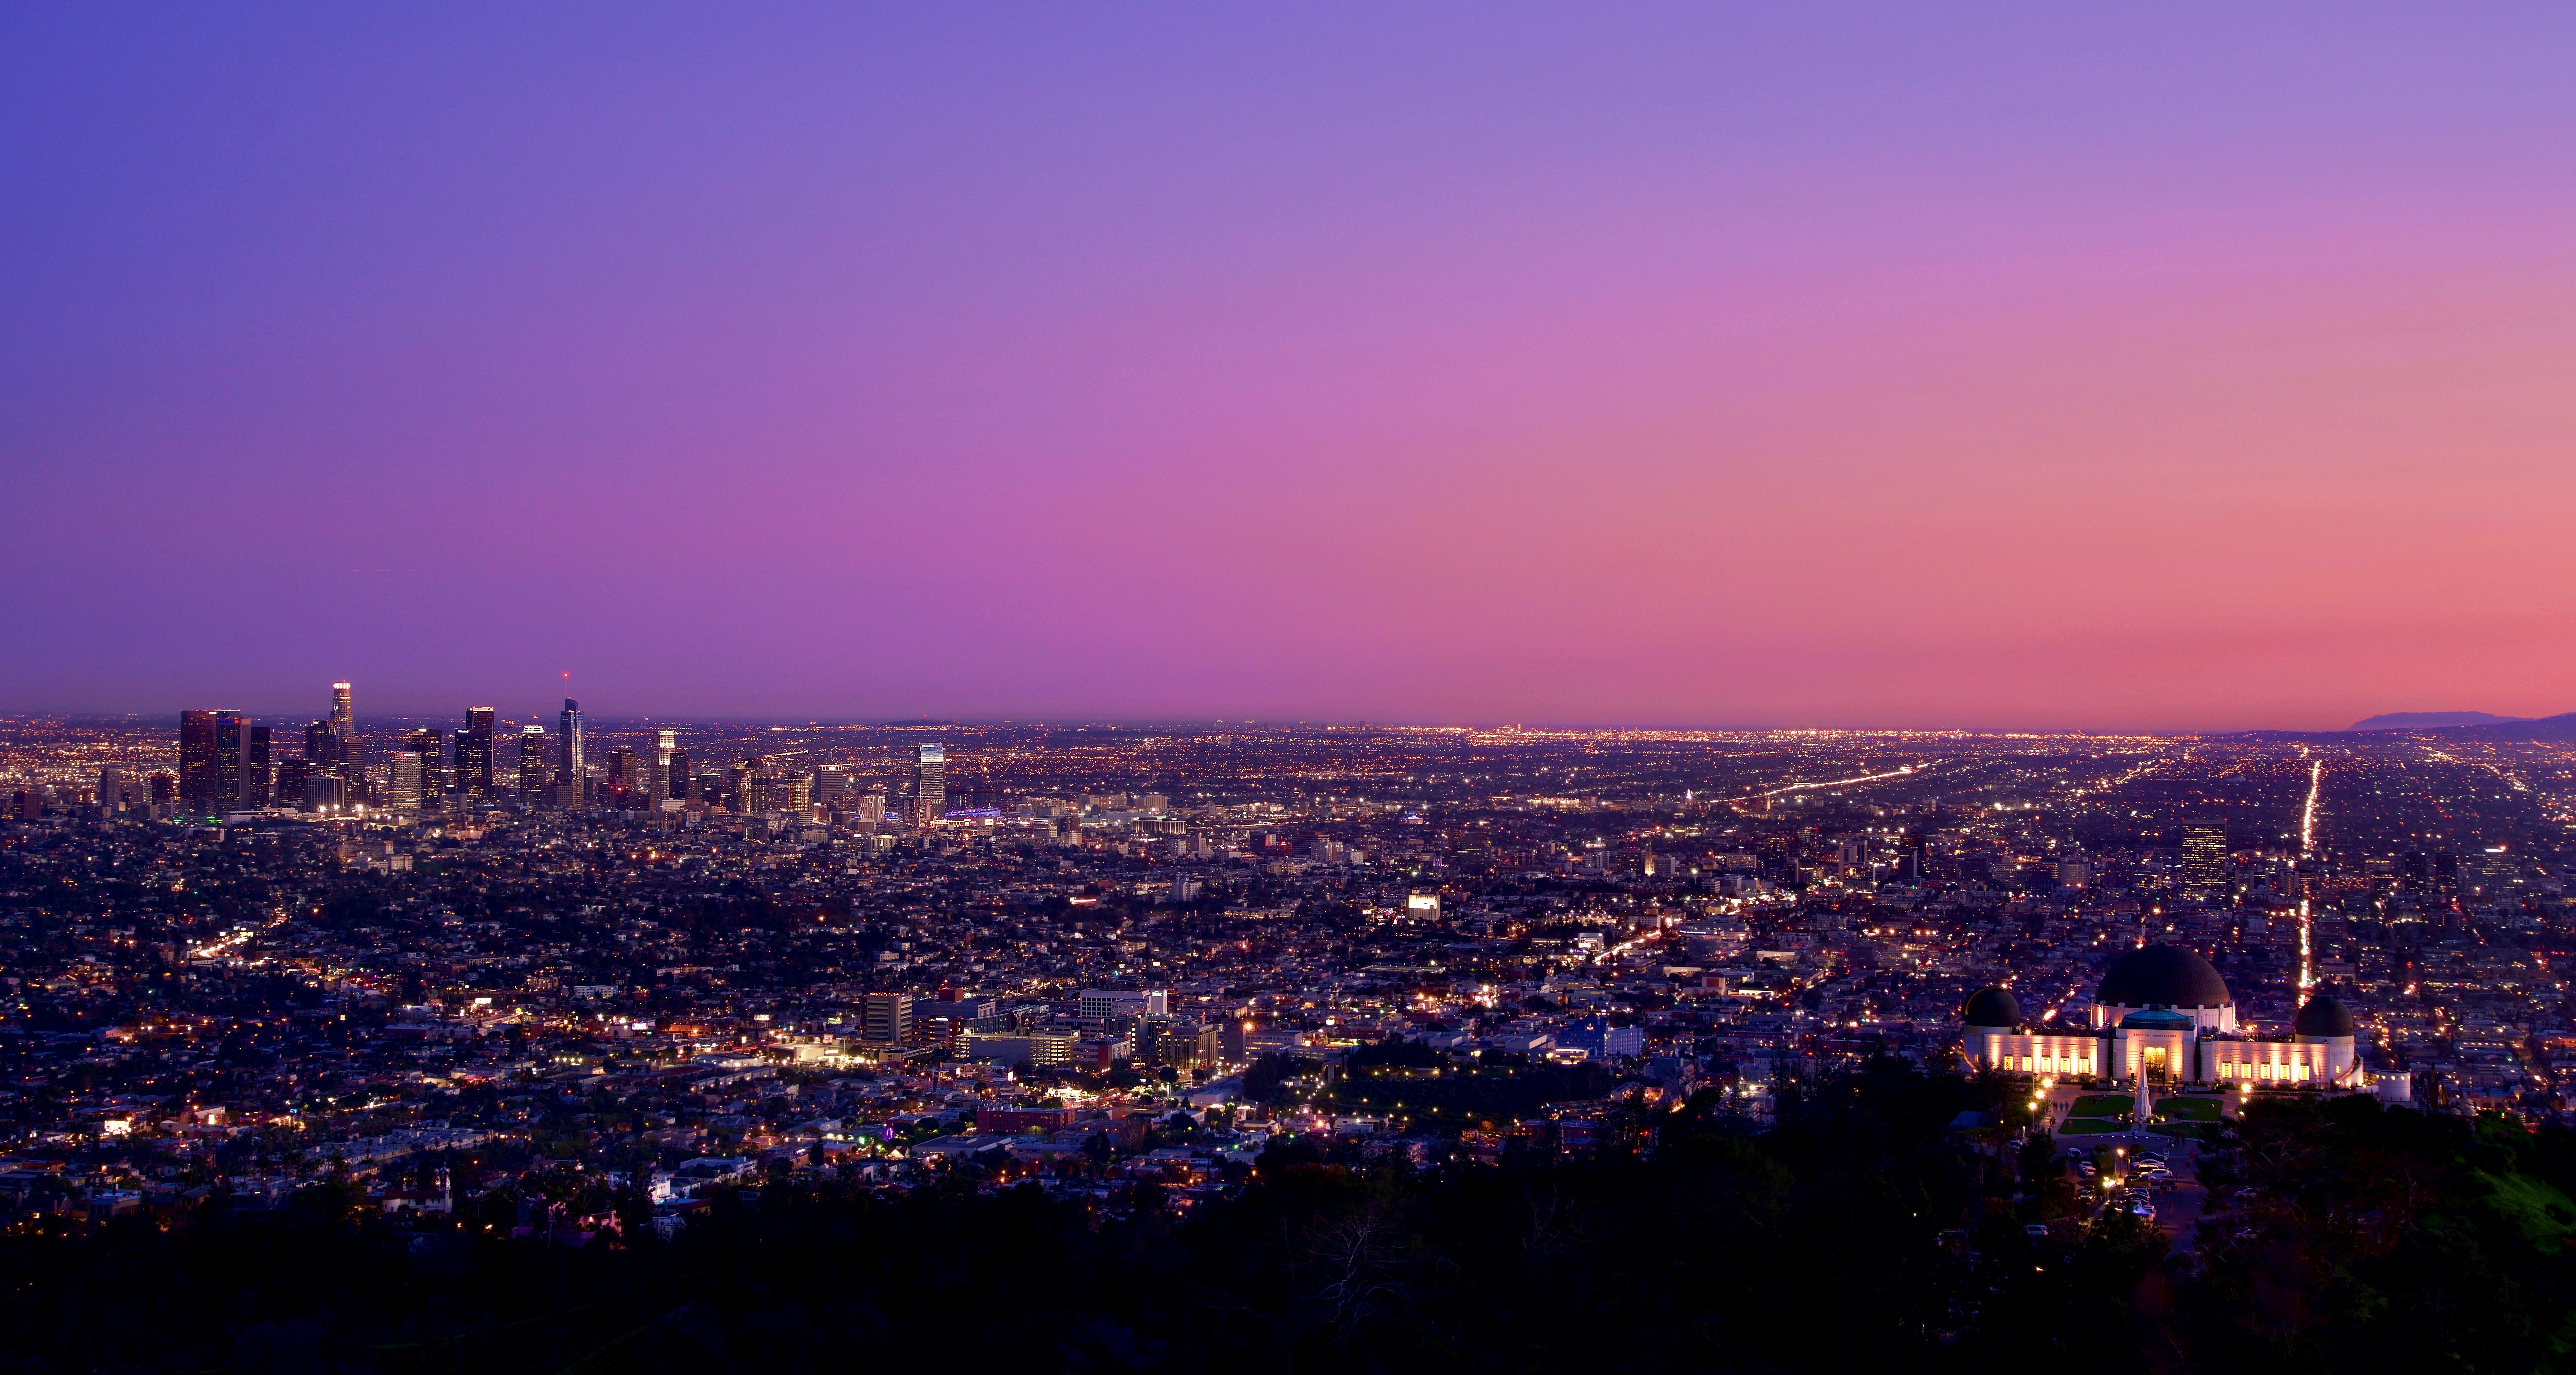 General 7952x4244 Los Angeles city sky lights city lights pink observatory Griffith Observatory dusk ultrawide